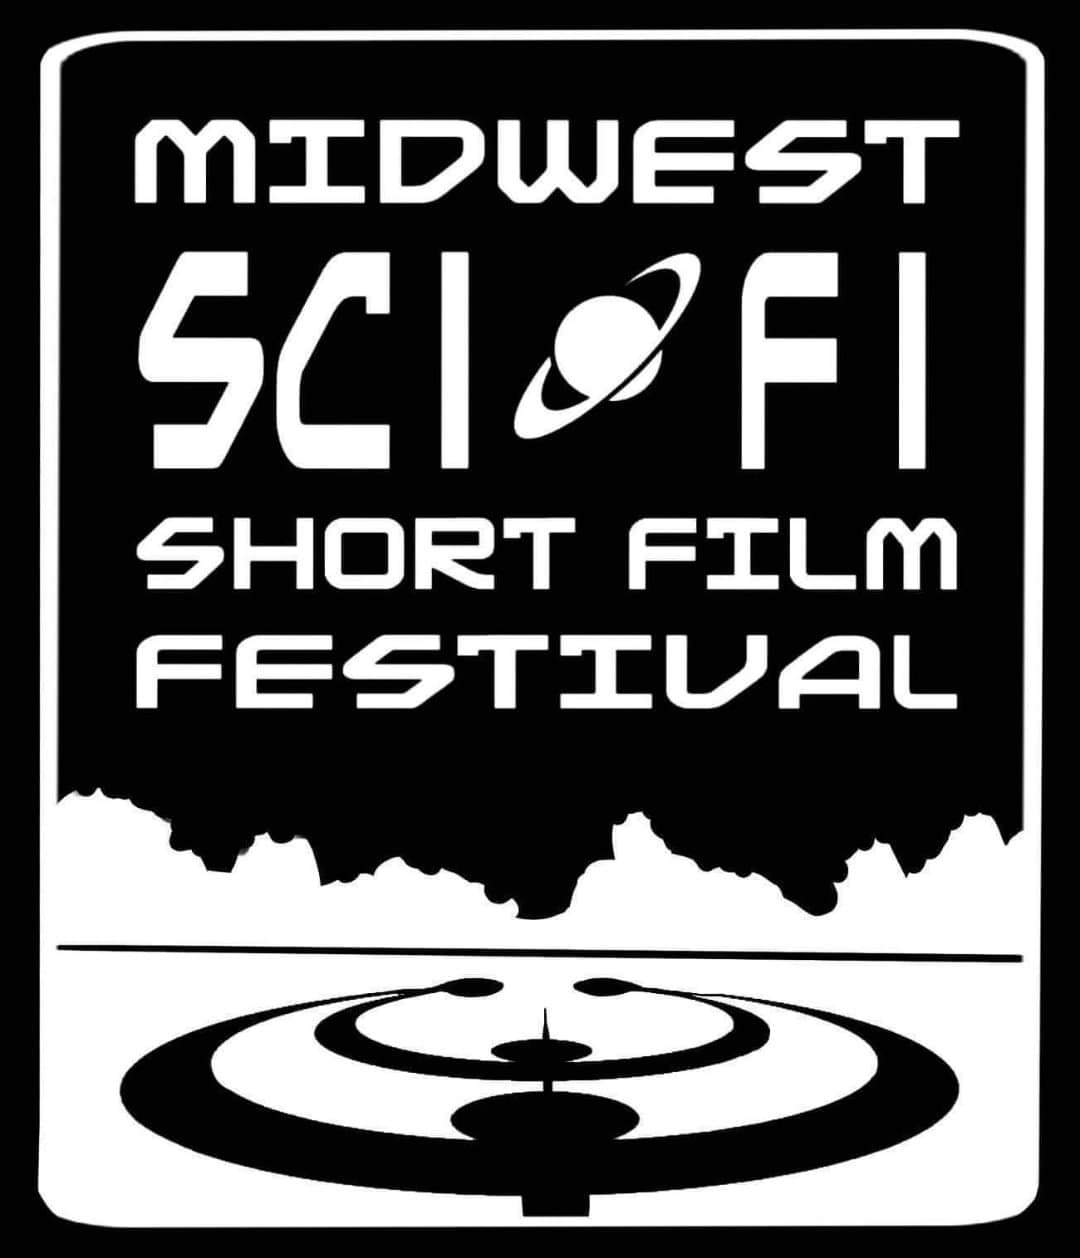 springvand Crack pot Pensioneret Midwest SciFi Short Film Festival